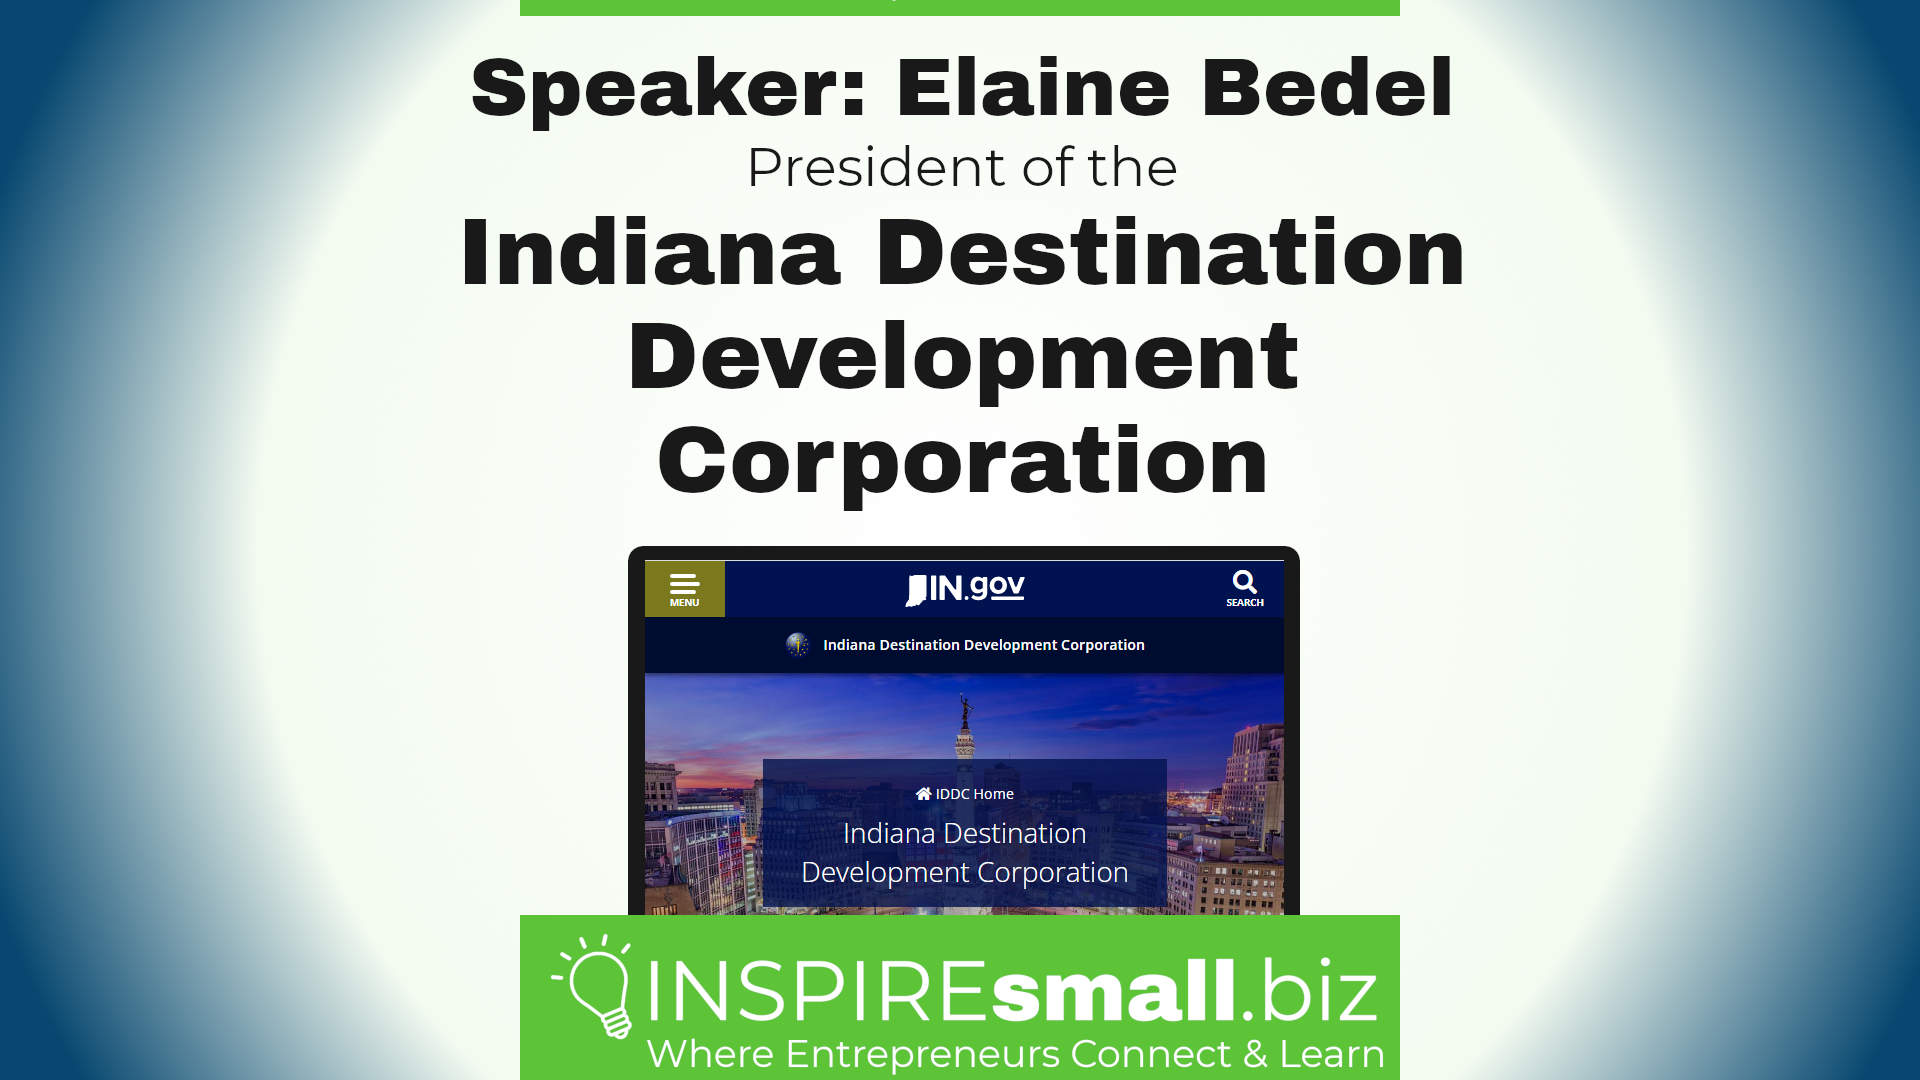 Speaker: Elaine Bedel, President of the Indiana Destination Development Corporation, hosted by INSPIREsmall.biz